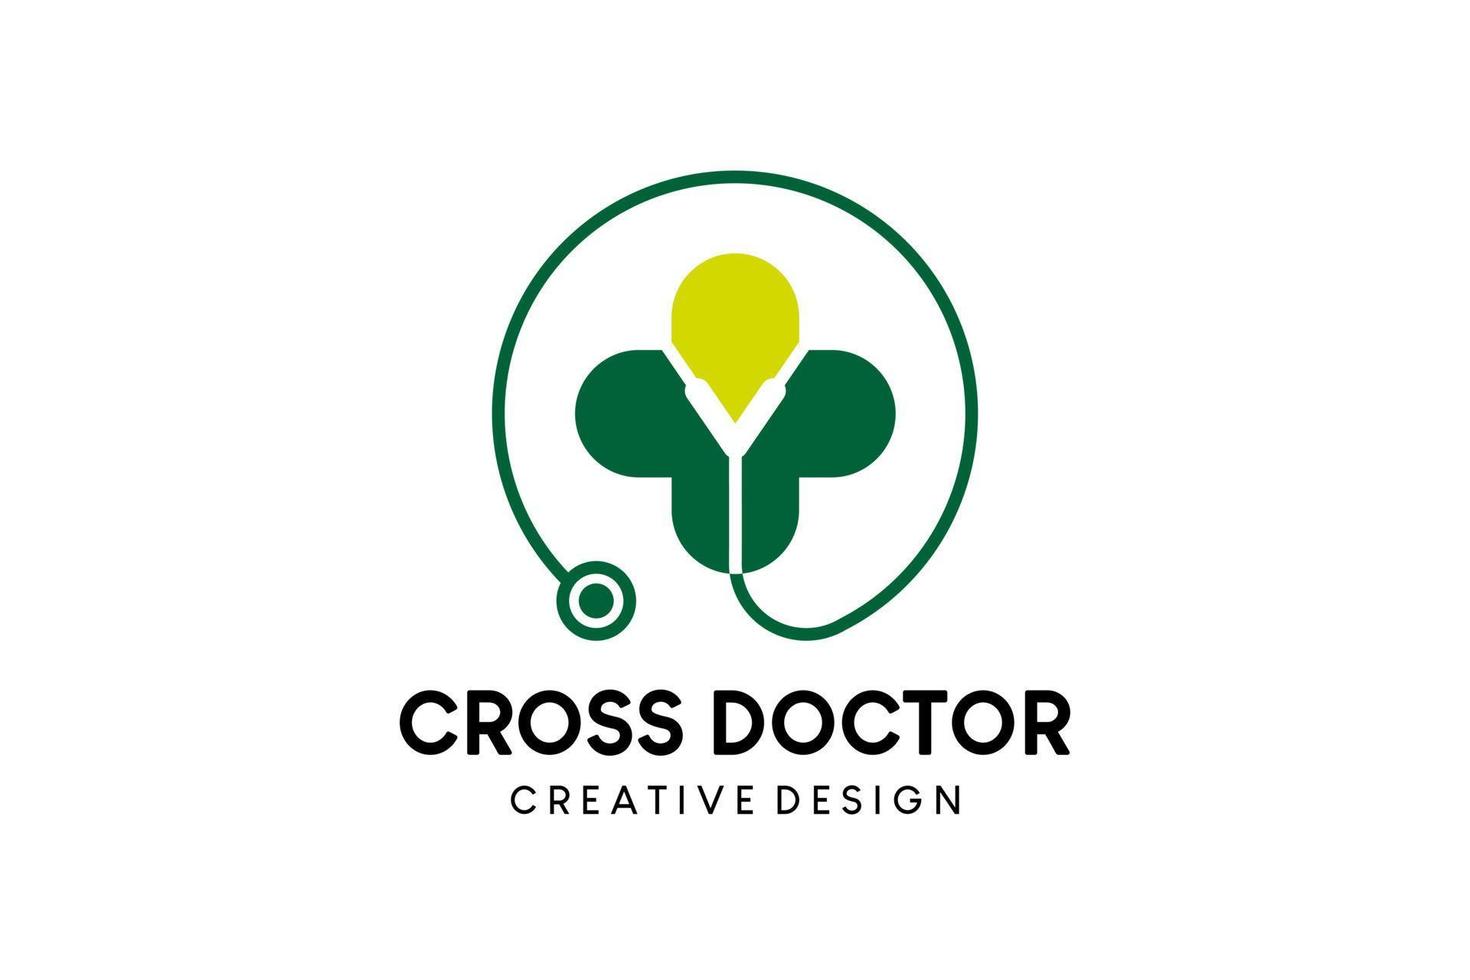 Cross doctor logo design, medical cross icon vector illustration